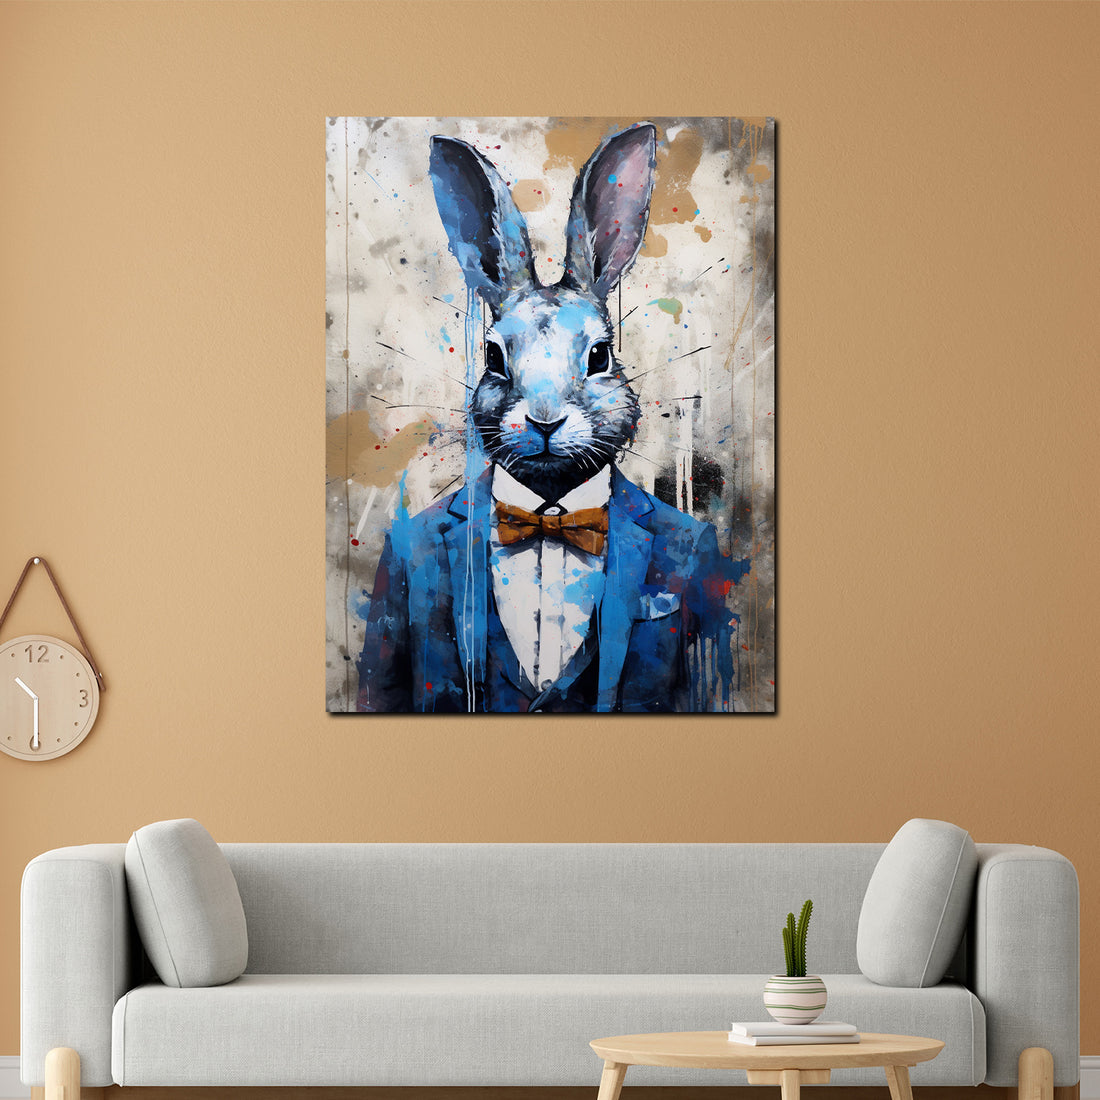 Wandbild abstrakt Pop Art Hase im blauen Anzug